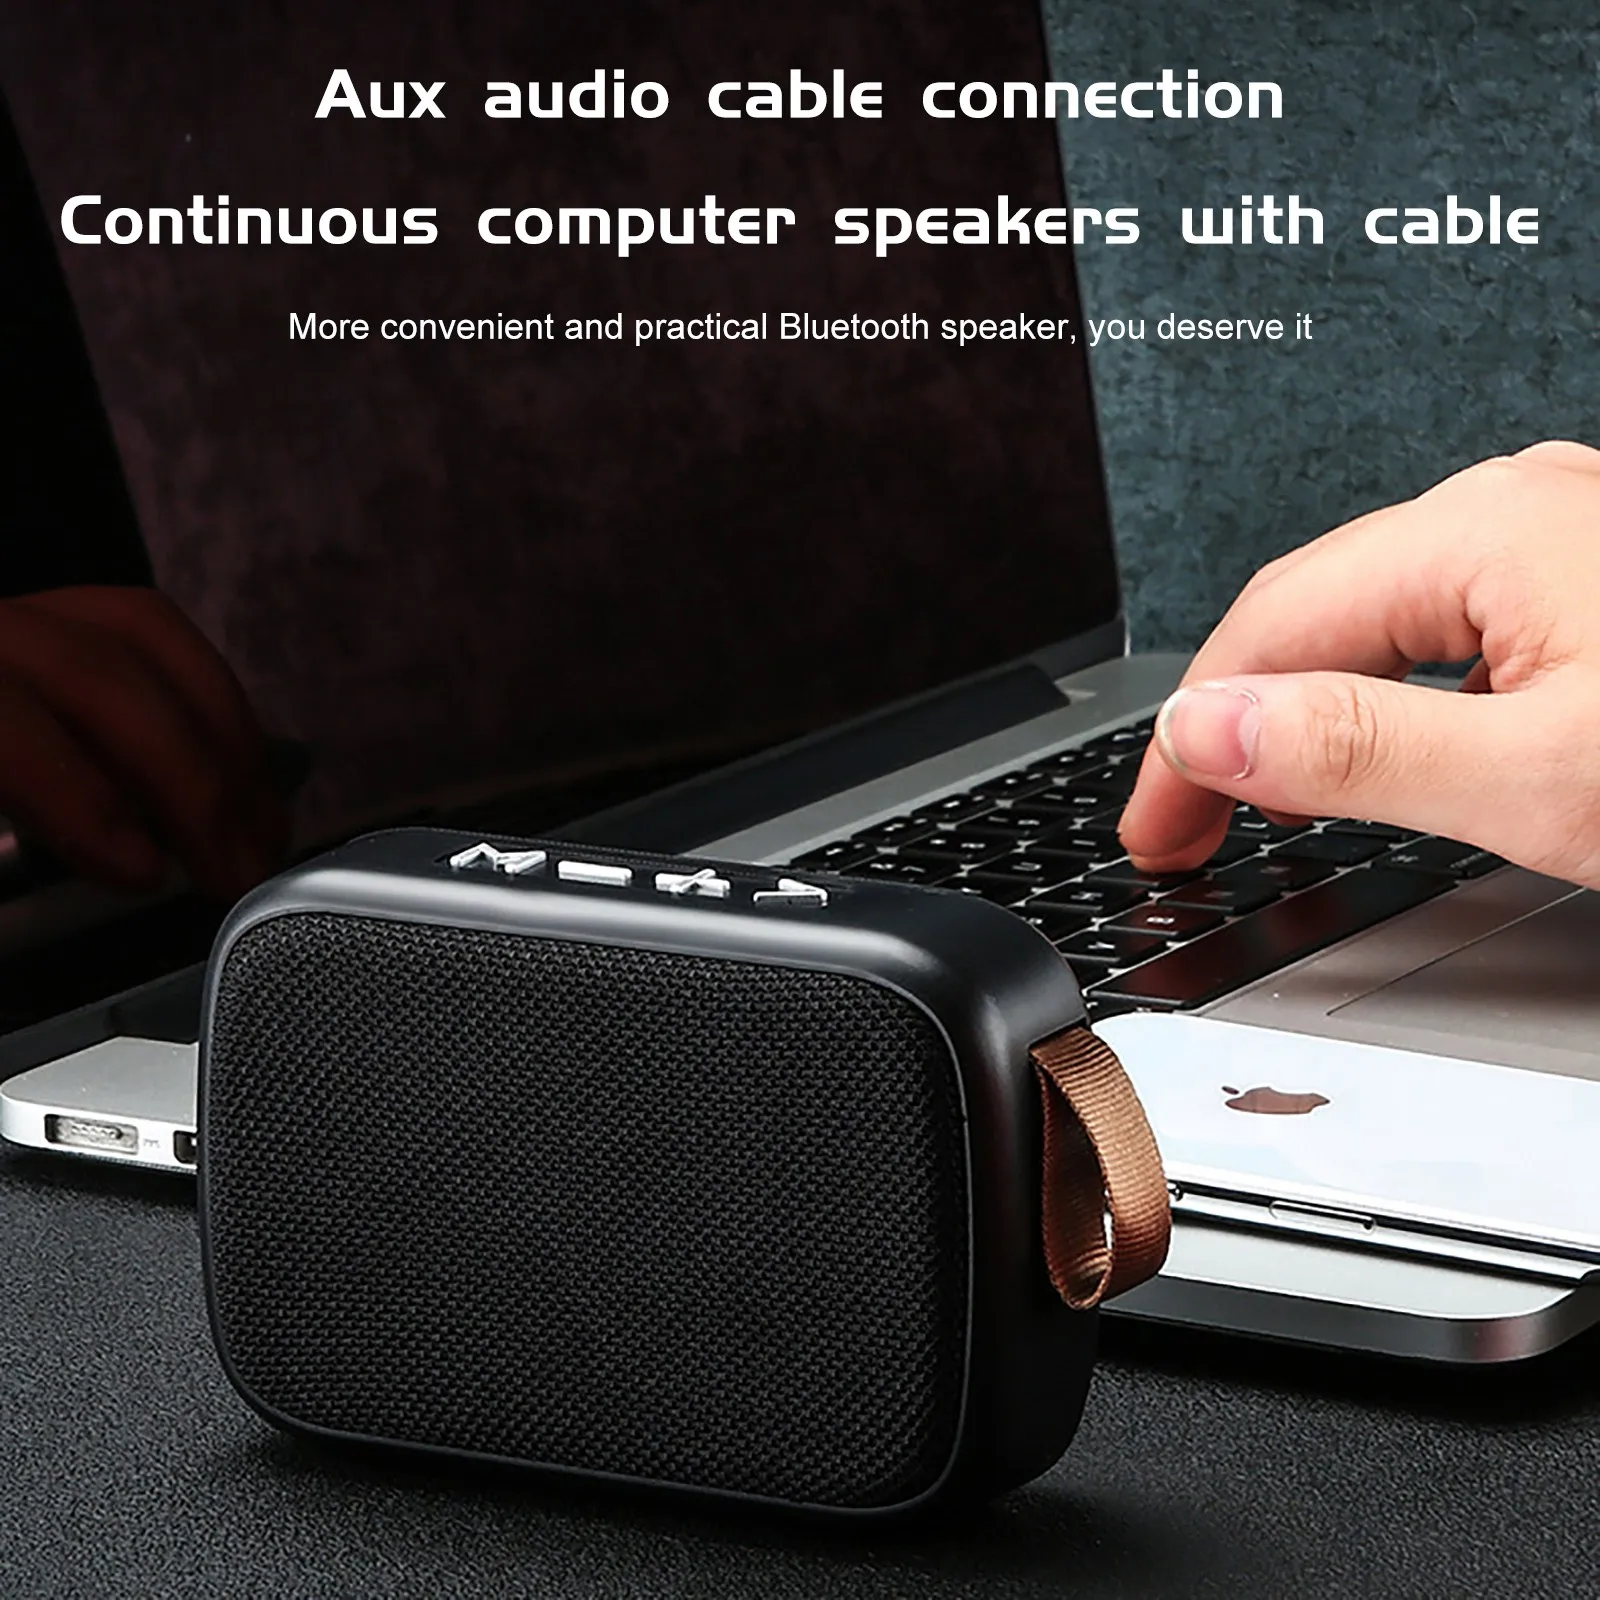 monitor speakers Portable Wireless Bluetooth Stereo SD Card FM Speaker Bluetooth Speaker Portable Bluetooth Speaker For Smartphone Tablet Laptop ion bluetooth speaker